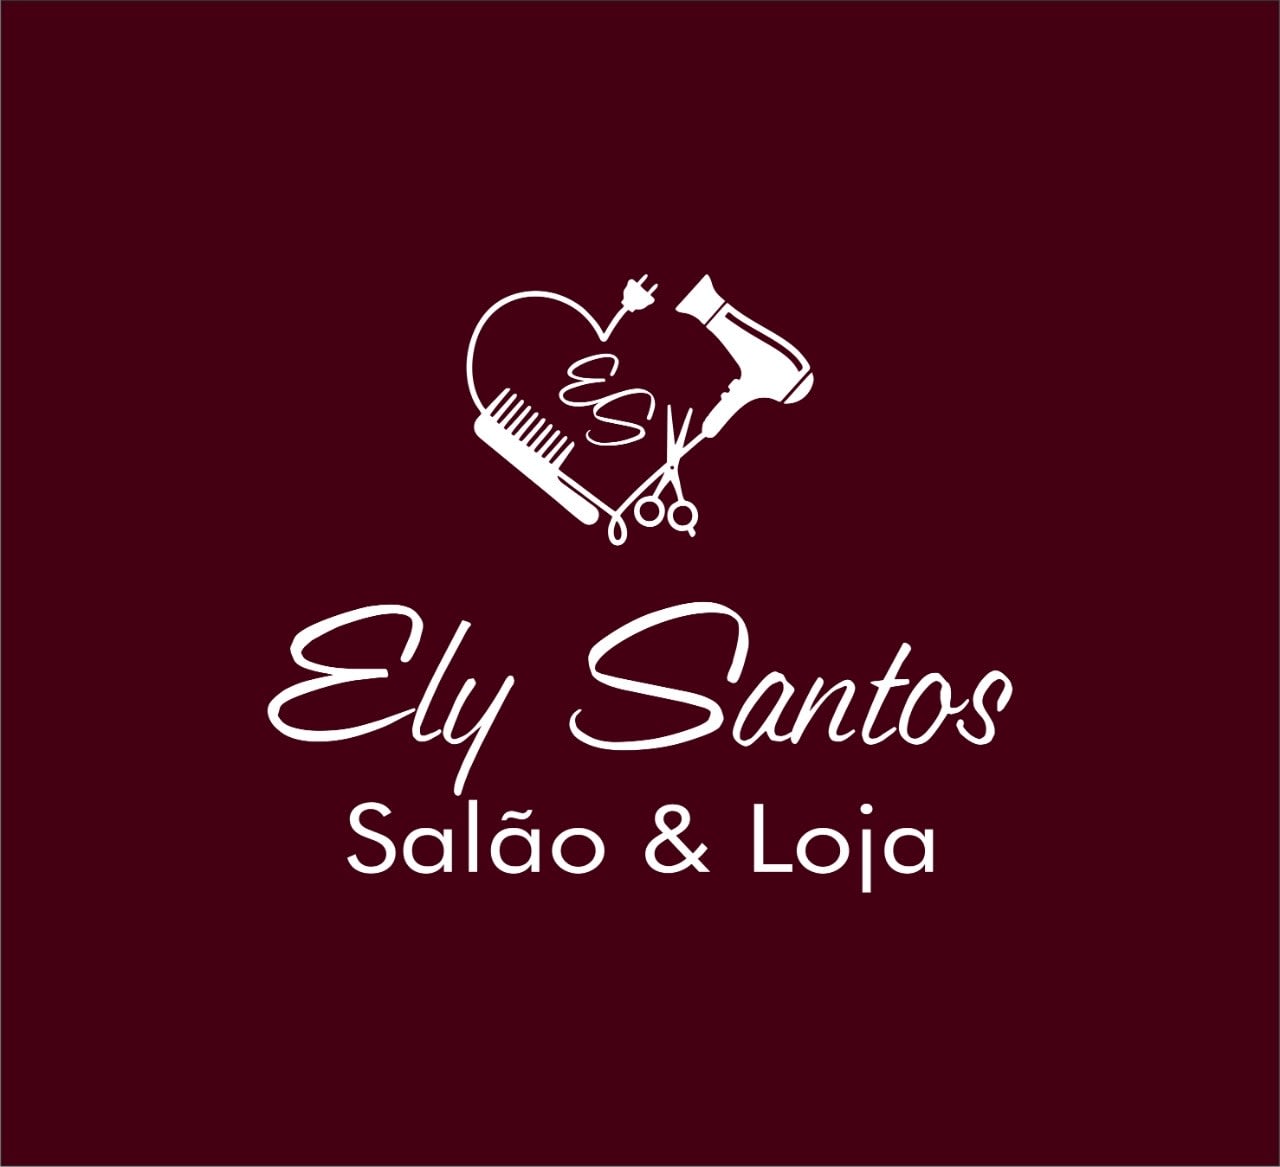 Ely Santos Salão & Loja